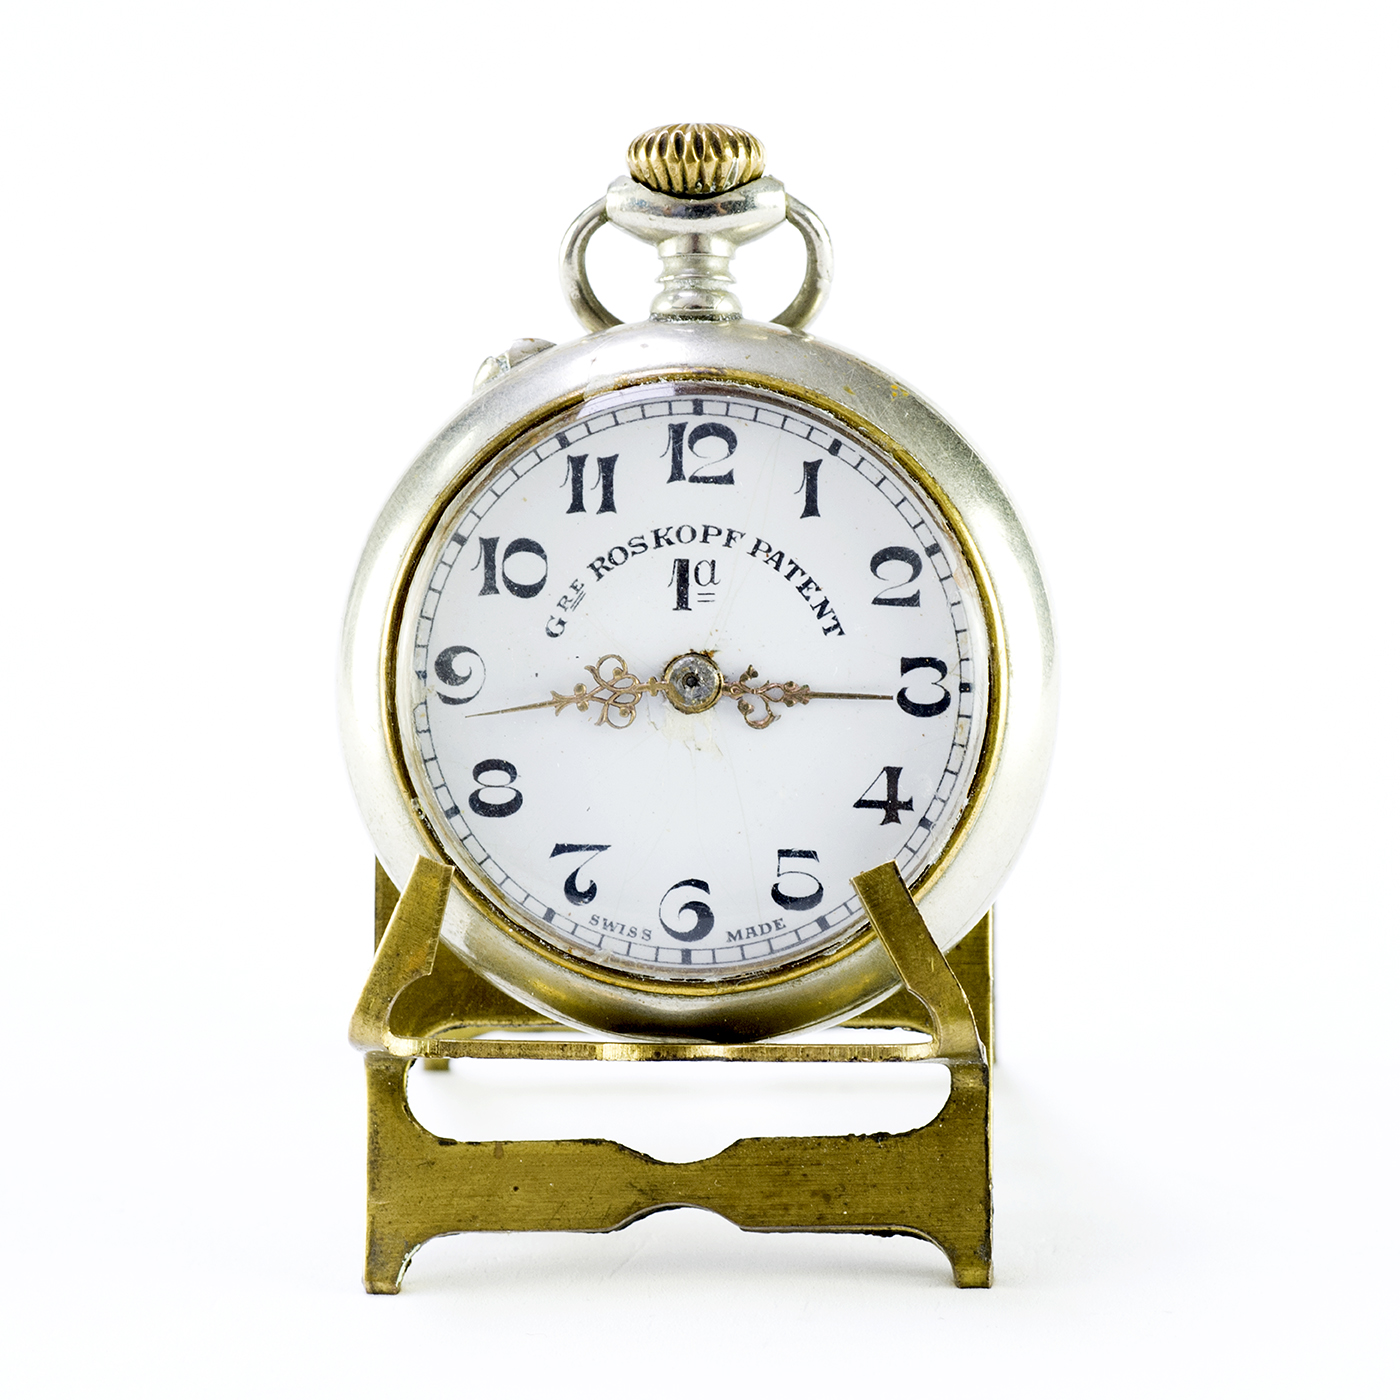 GRE ROSKOPF PATENT 1ª. Reloj de bolsillo, lepine y remontoir. Suiza, ca.1900.